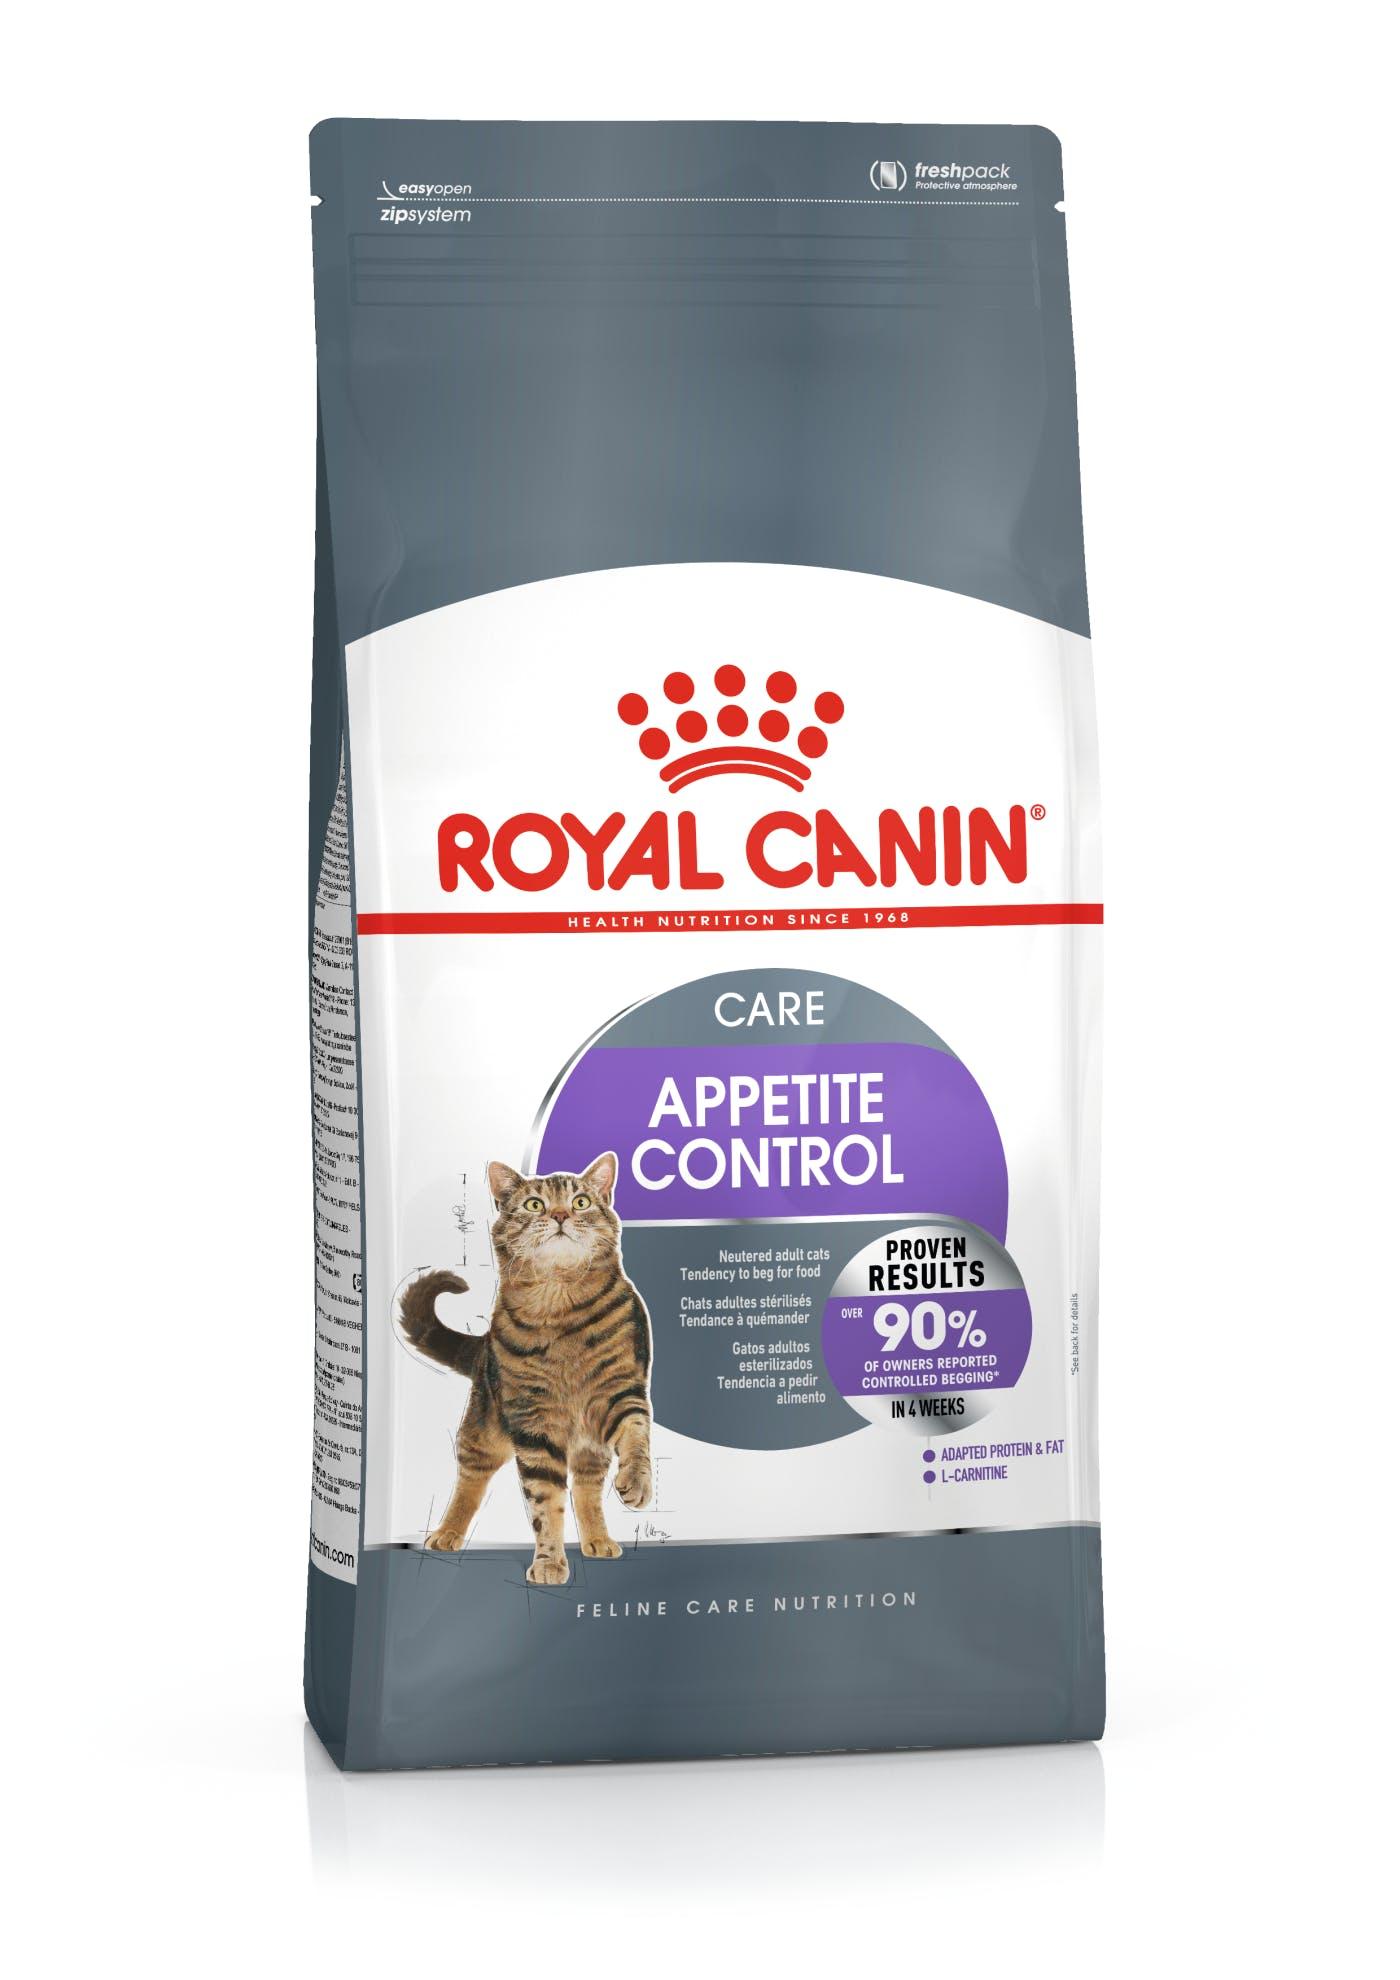 Selected image for ROYAL CANIN Suva hrana za sterilisane mačke Appetite Control Care 2kg